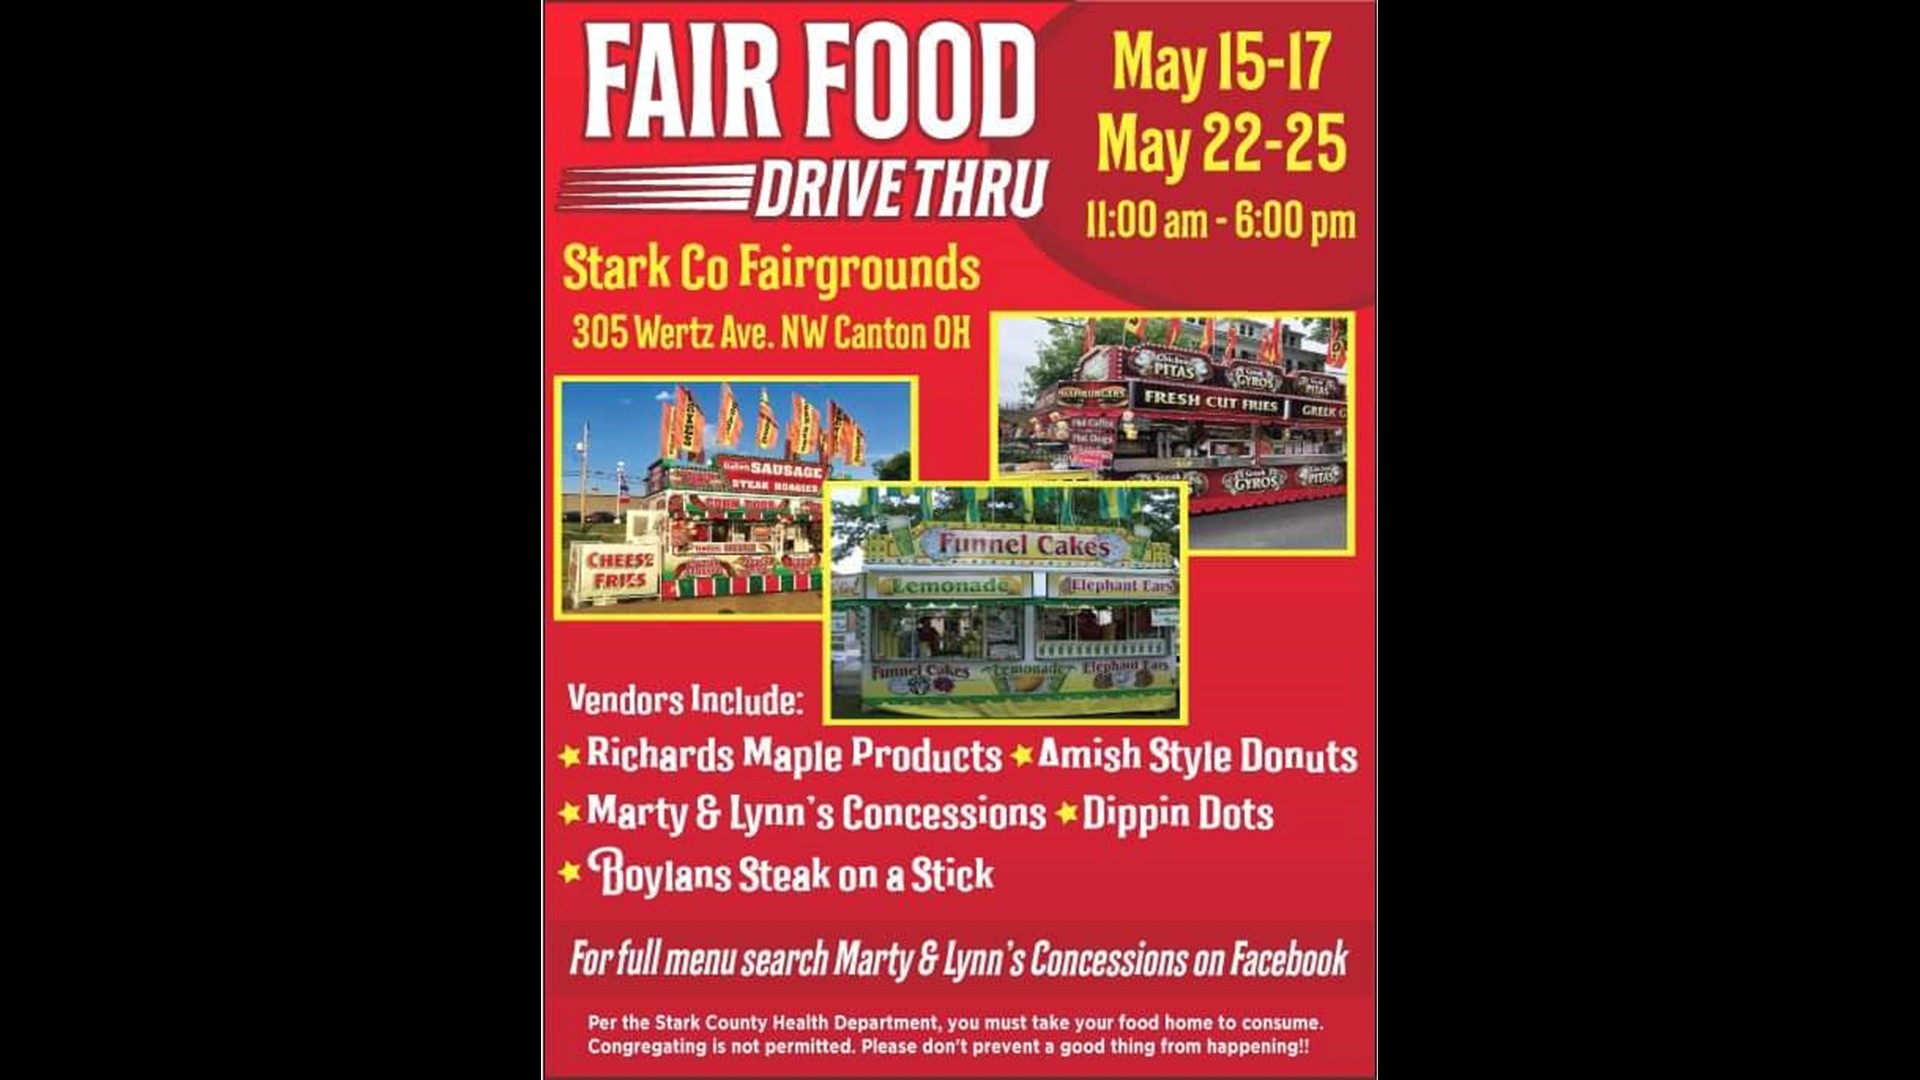 Stark County Fair to offer drivethru fair foods from several vendors